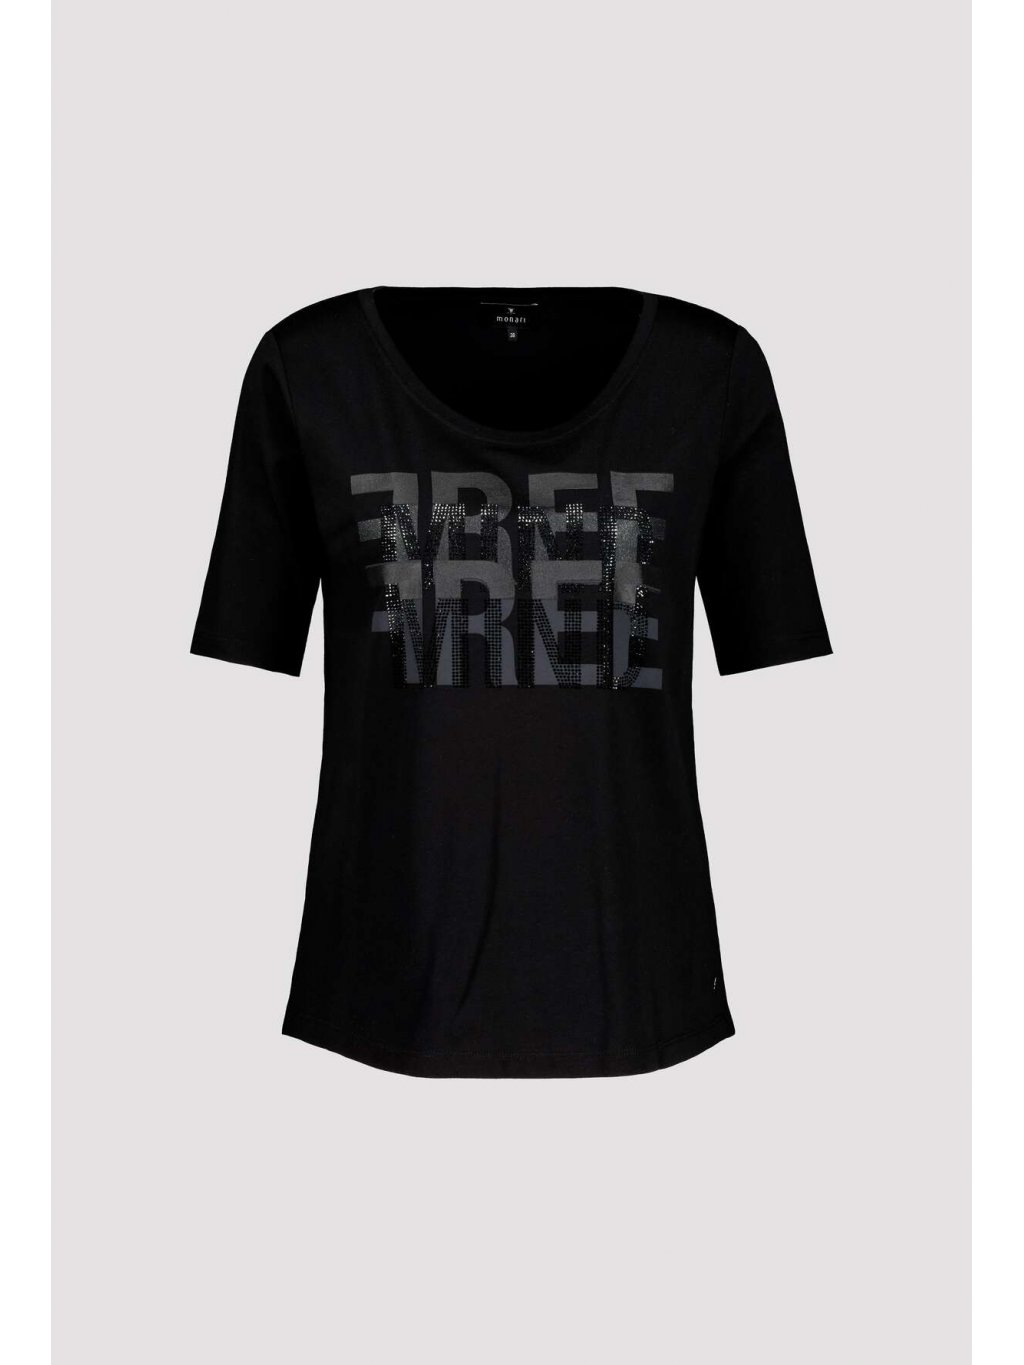 Tričko Monari 6222 černé s grafikou FREE